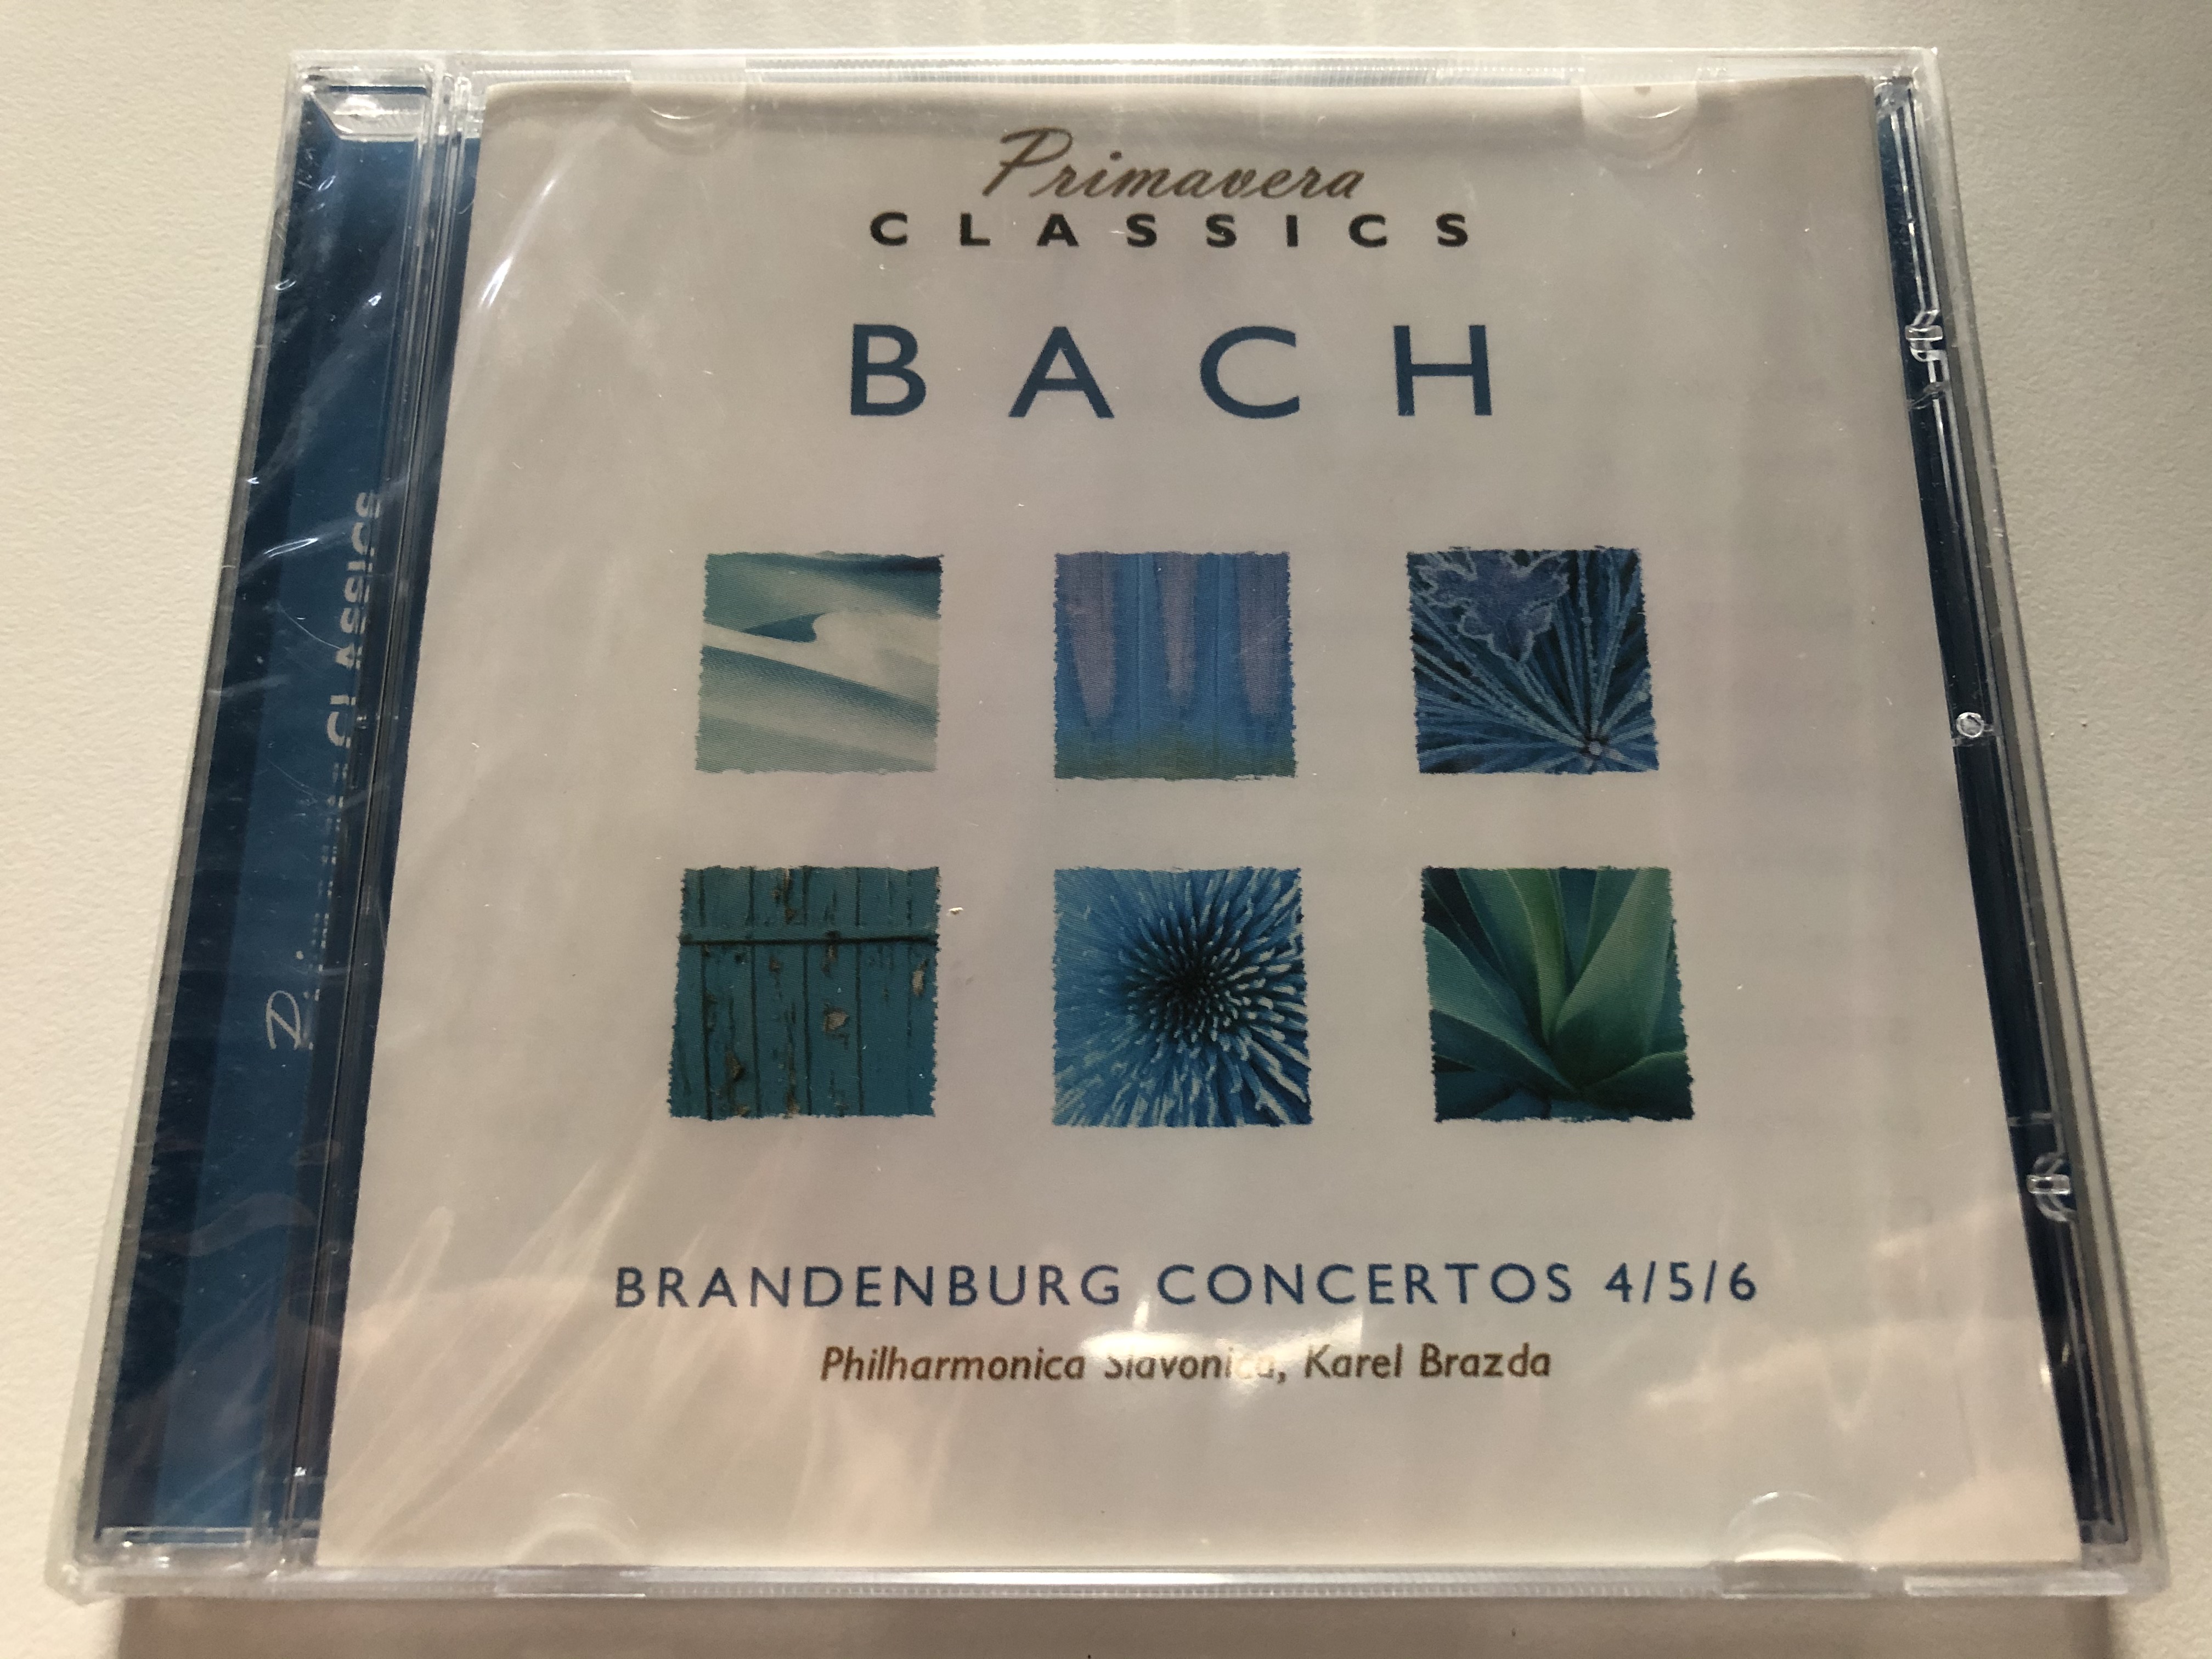 primavera-classics-bach-brandenburg-concertos-456-philharmonica-slavonica-karel-brazda-lmm-audio-cd-2006-3516182-1-.jpg